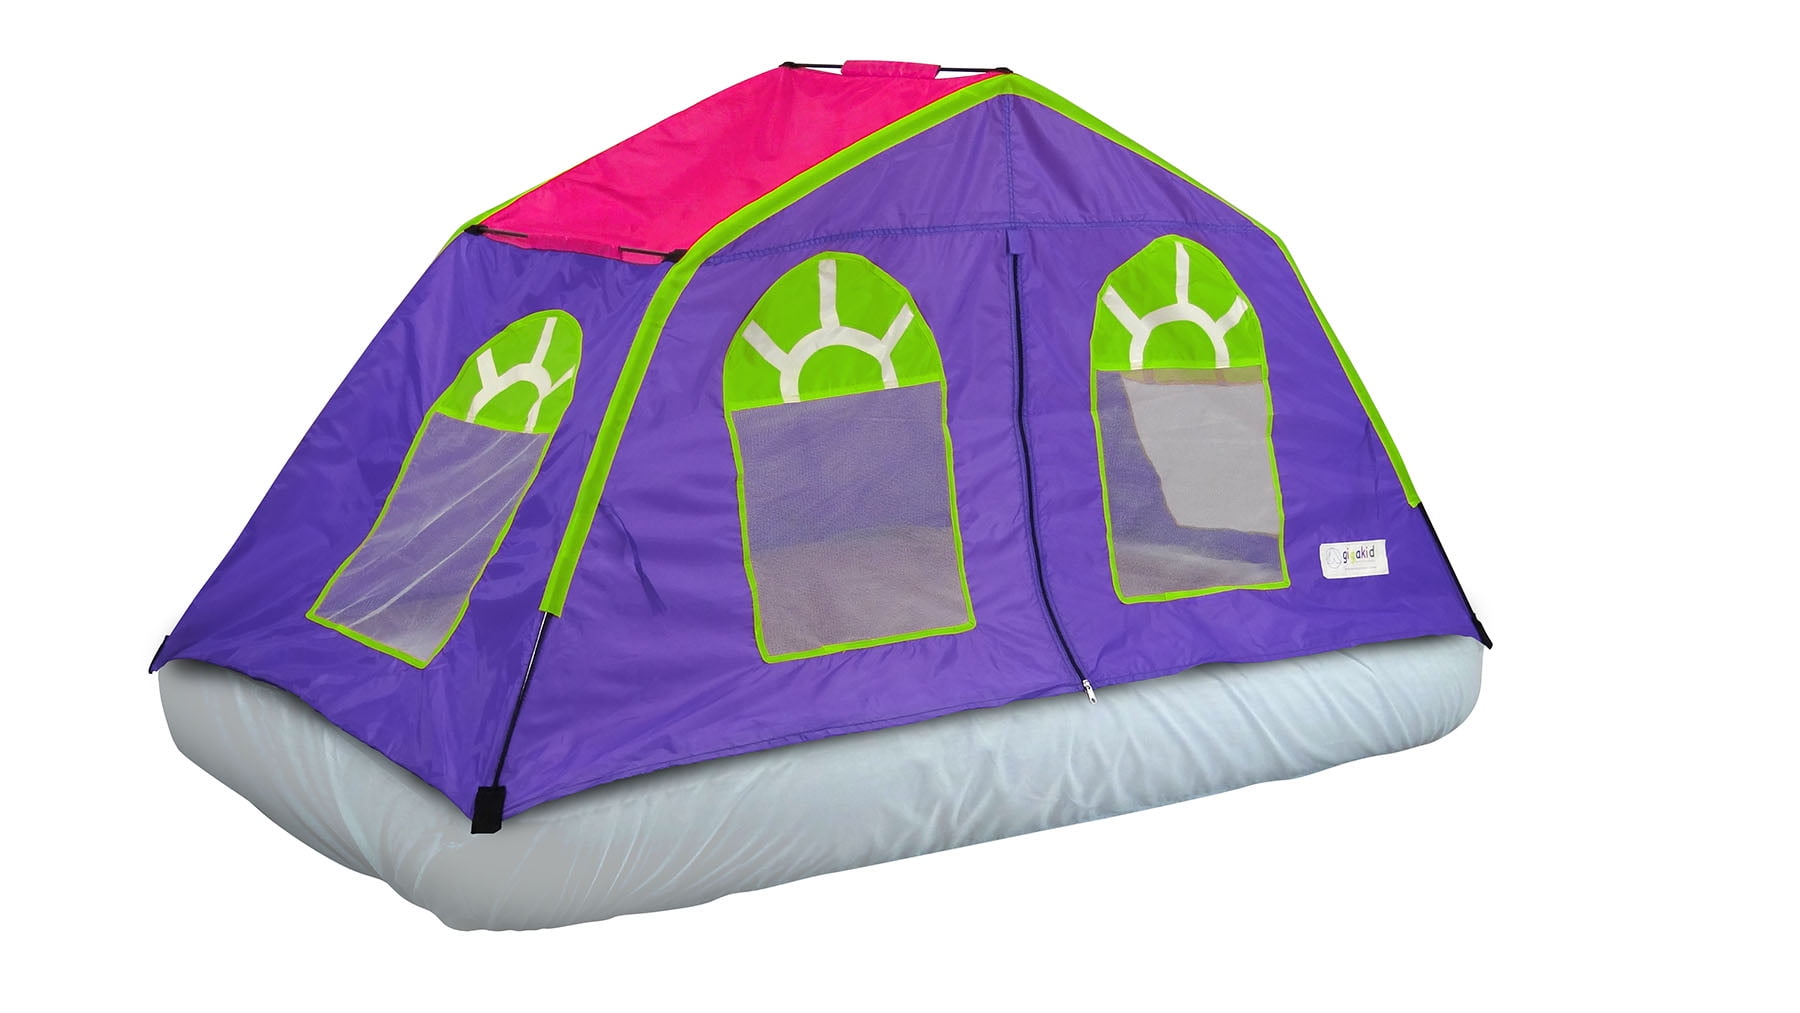 Bed Sheet Tent Top Sellers, 56% OFF | www.emanagreen.com